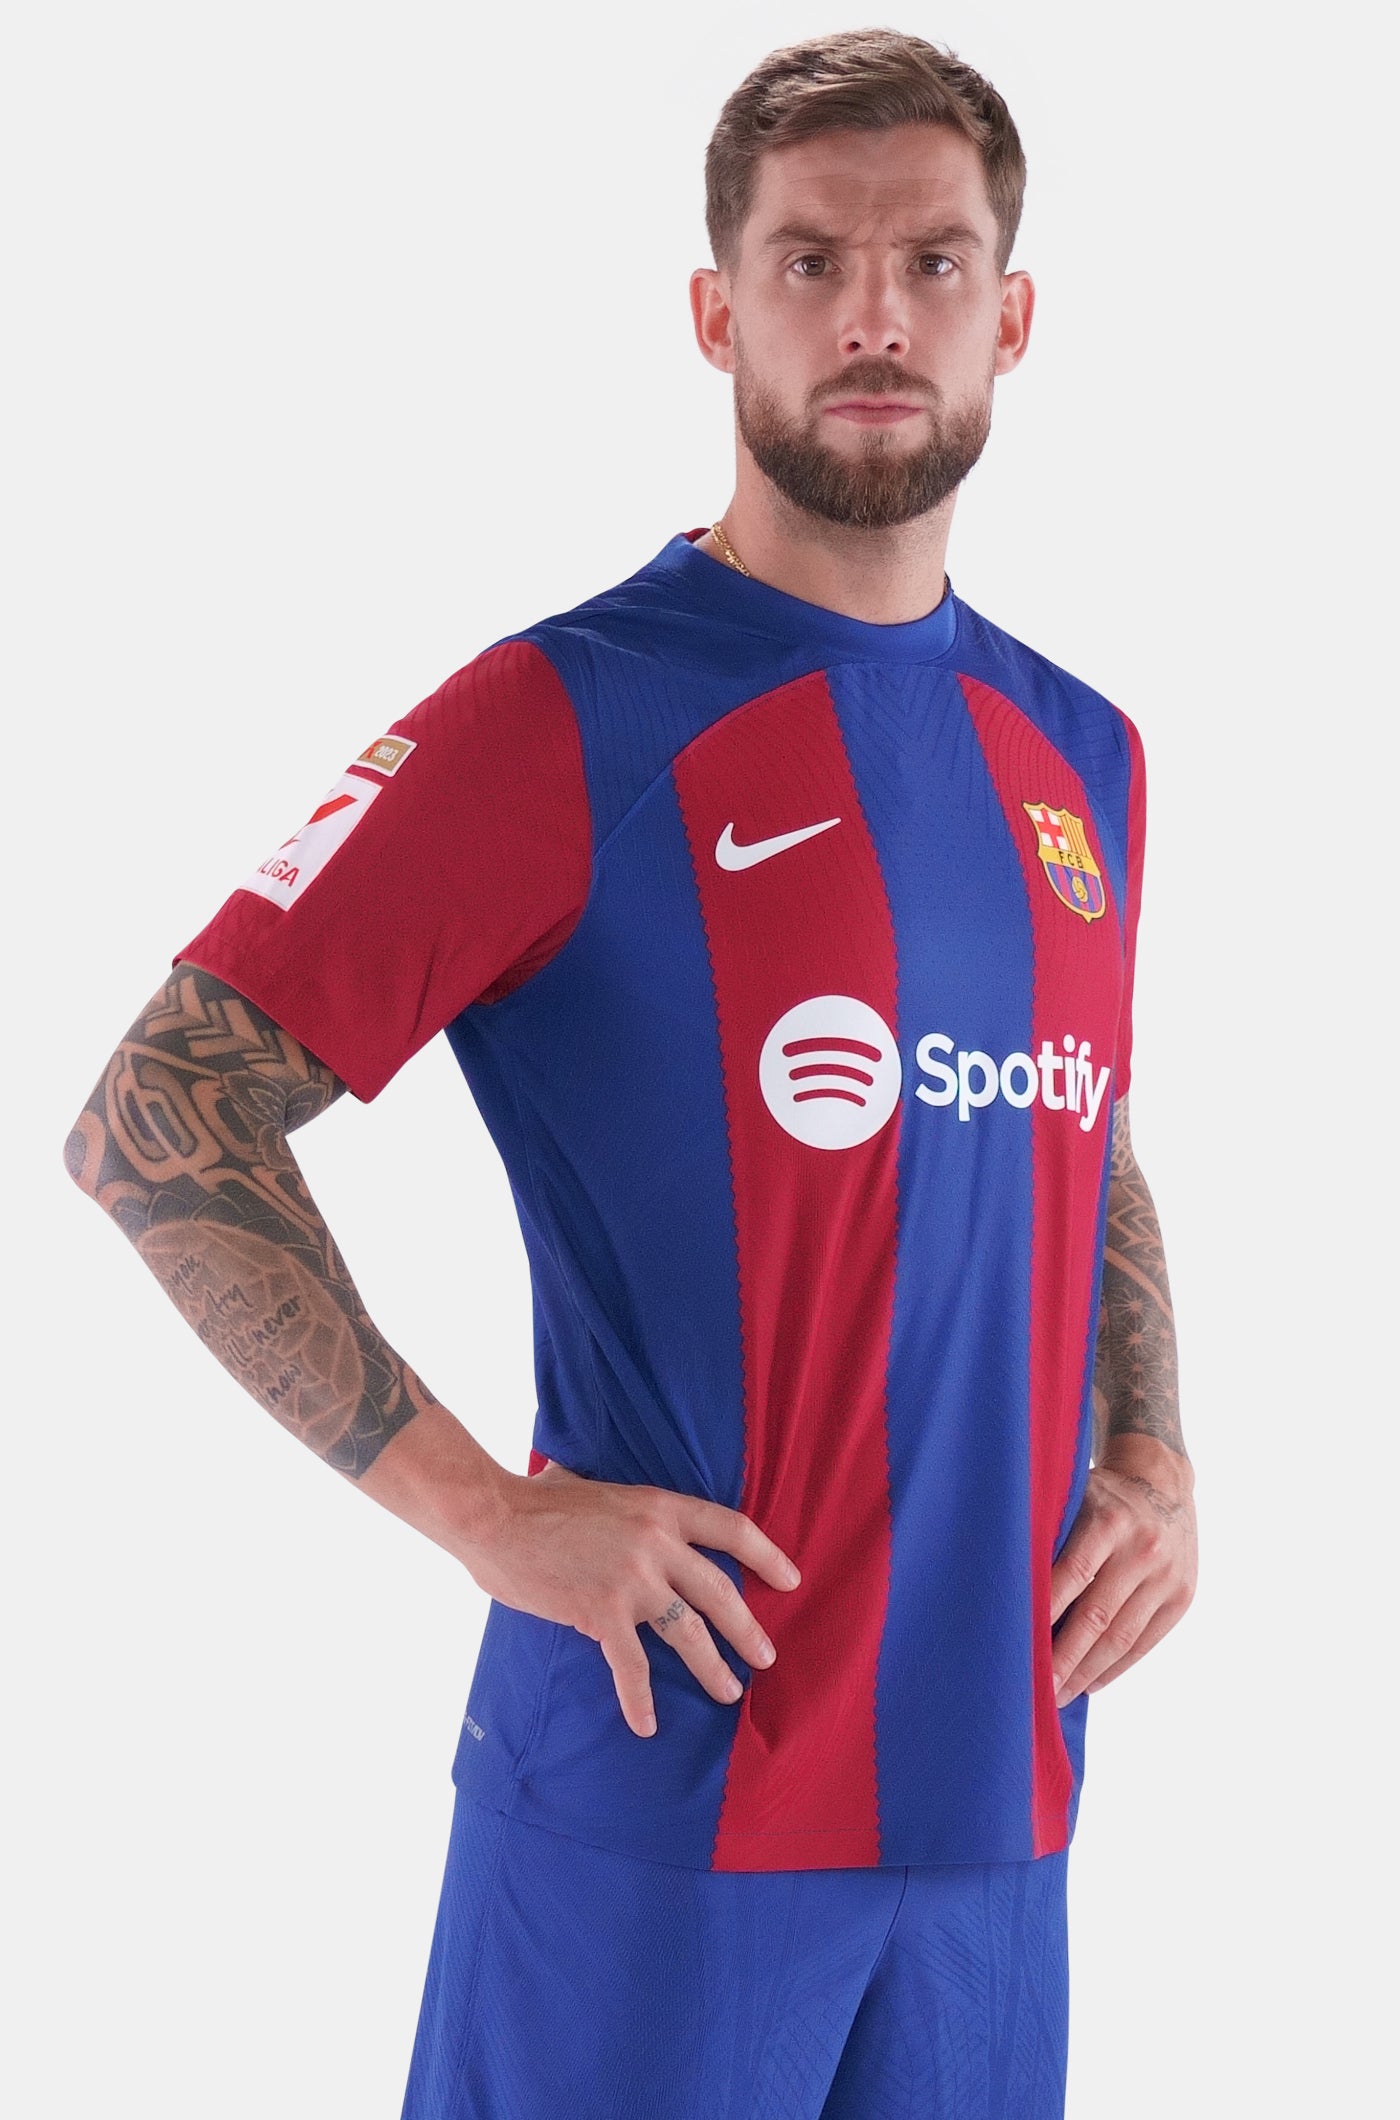 LFP FC Barcelona home shirt 23/24 Player's Edition - I. MARTÍNEZ